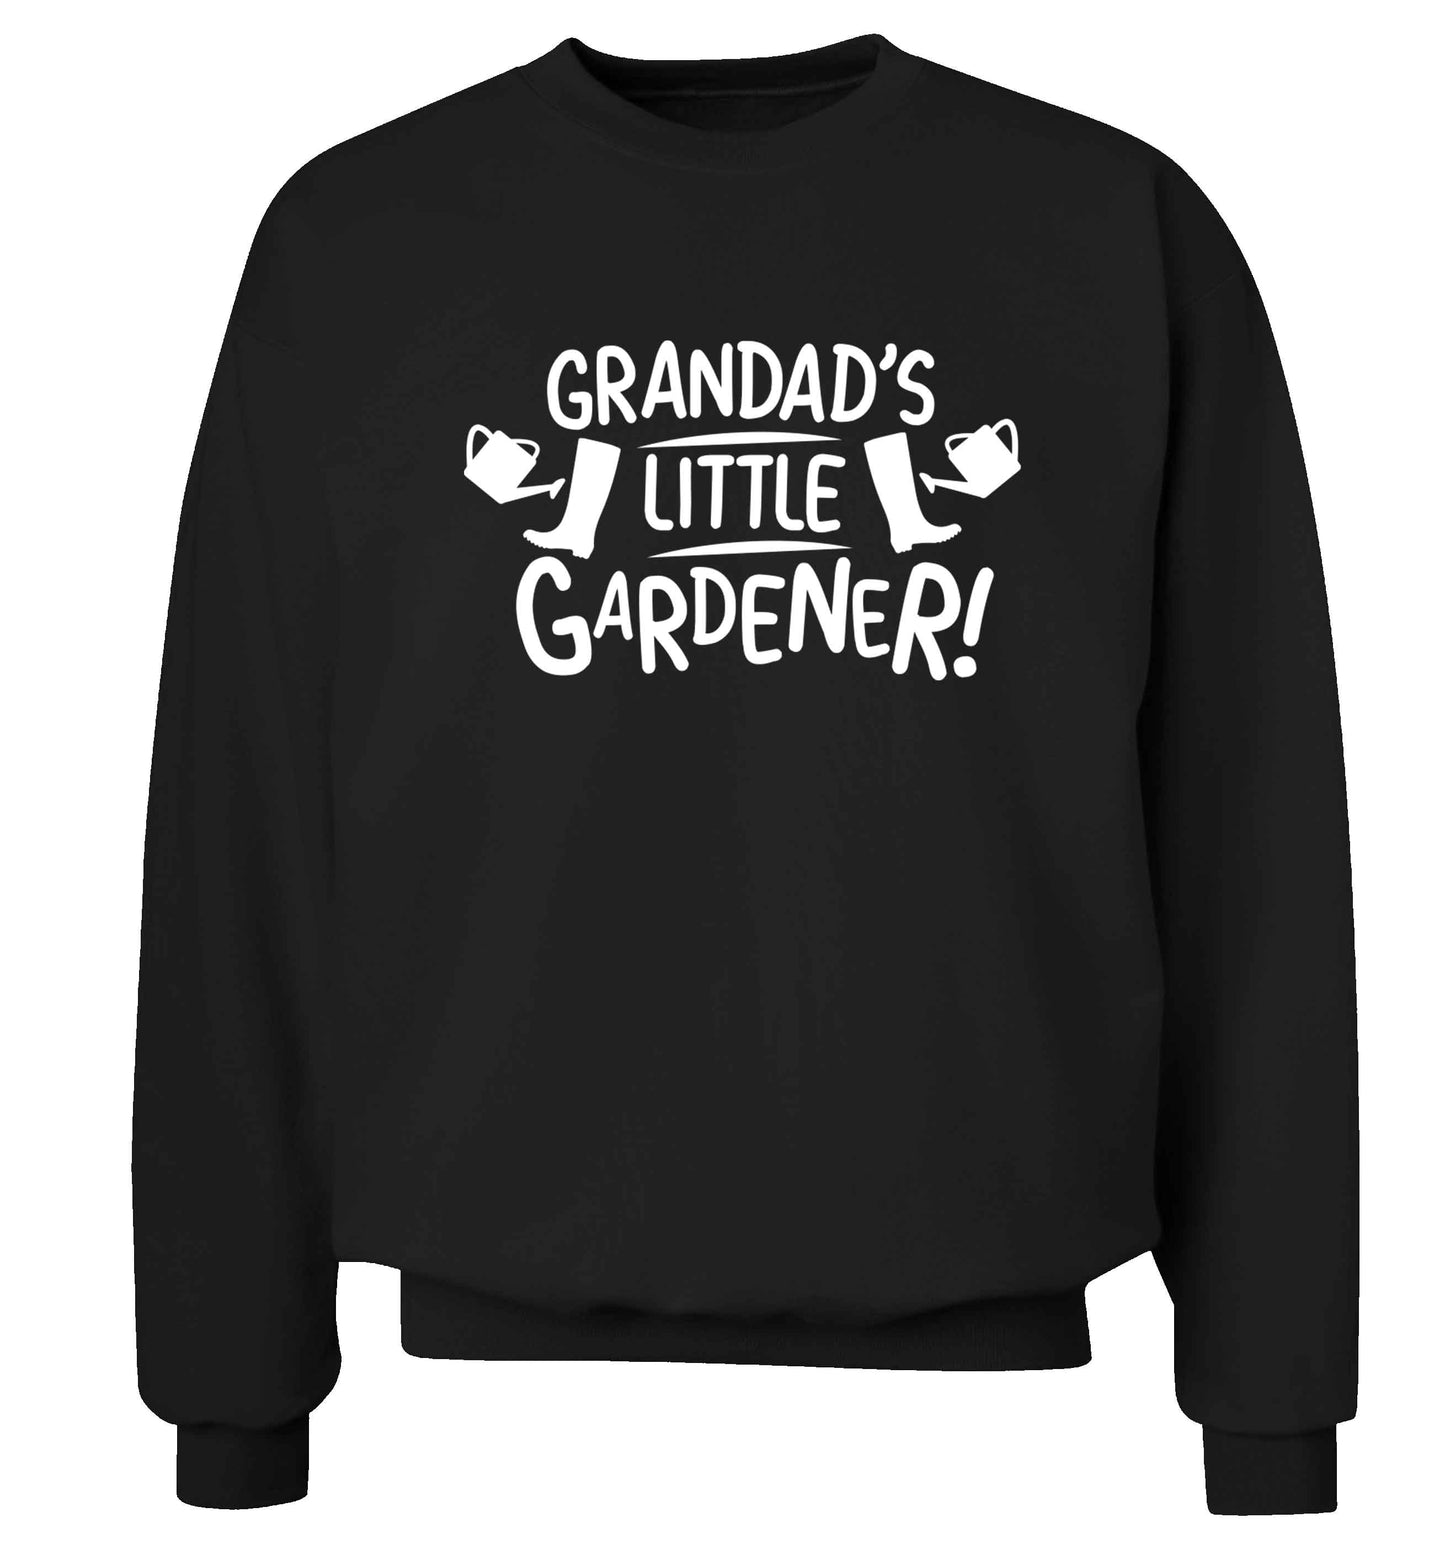 Grandad's little gardener Adult's unisex black Sweater 2XL